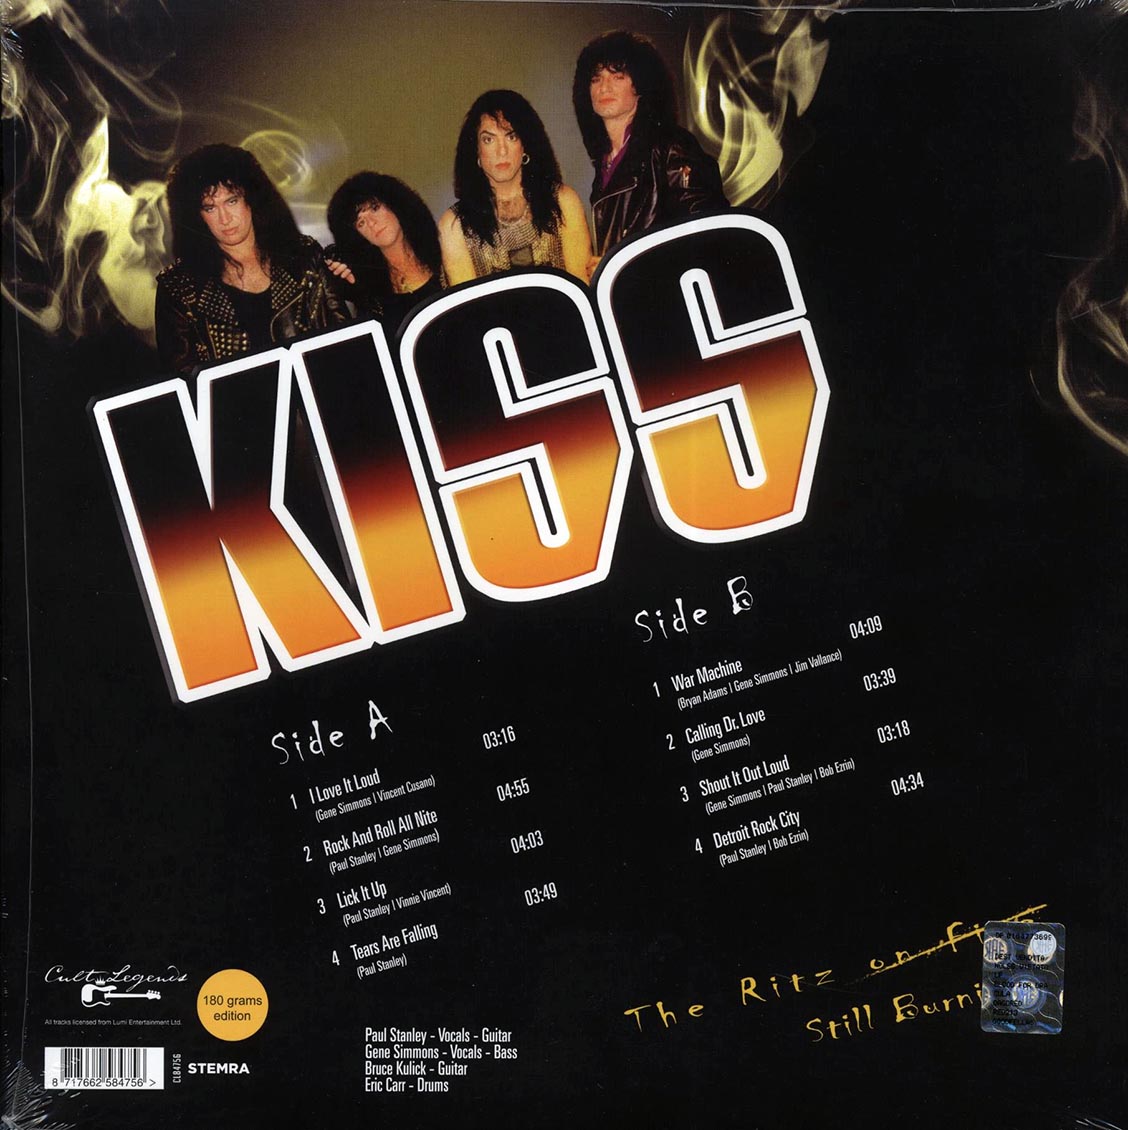 Kiss - The Ritz On Fire Part 2: Still Burning, The Ritz, New York, August 12th 1988 - Vinyl LP, LP